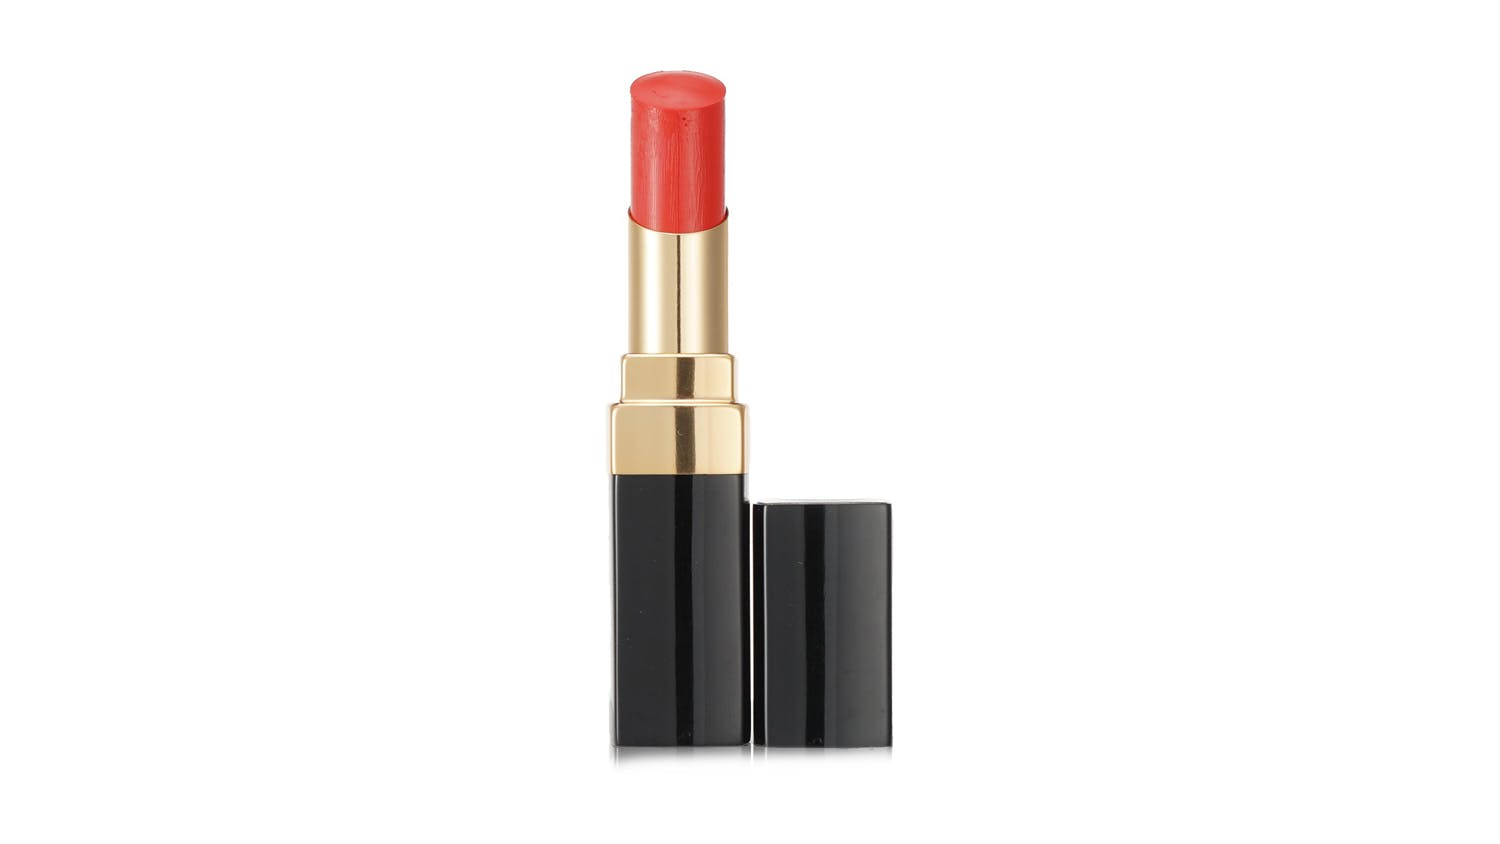 Chanel Rouge Coco Flash Hydrating Vibrant Shine Lip Colour - # 60 Beat -  3g/0.1oz